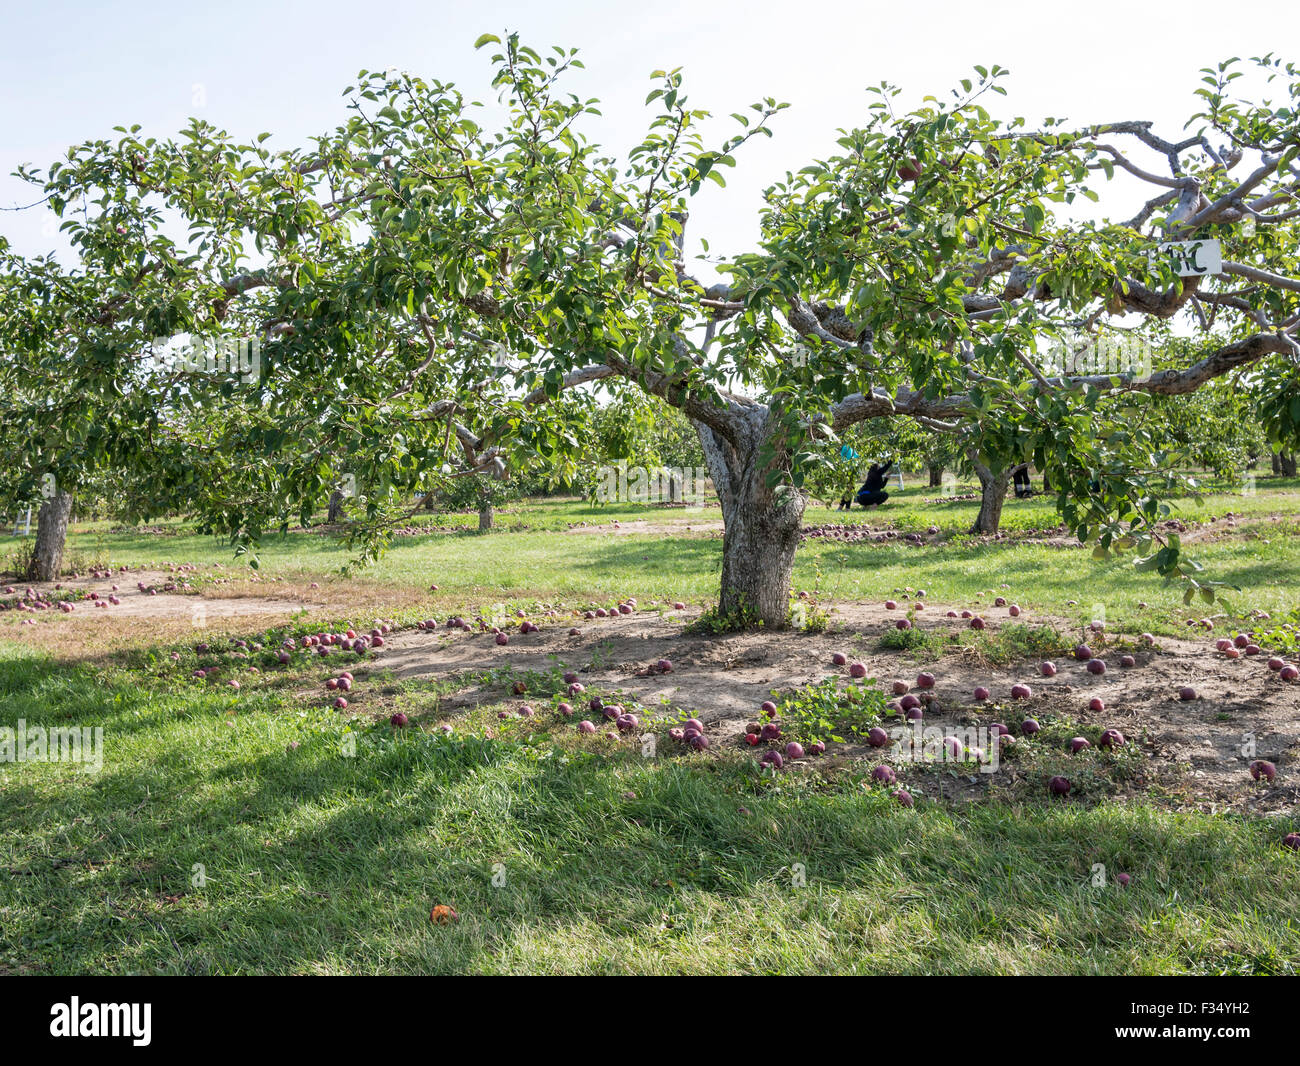 Apple Macintosh albero caduto e mele in un Apple orchard, Ontario, Canada. Foto Stock